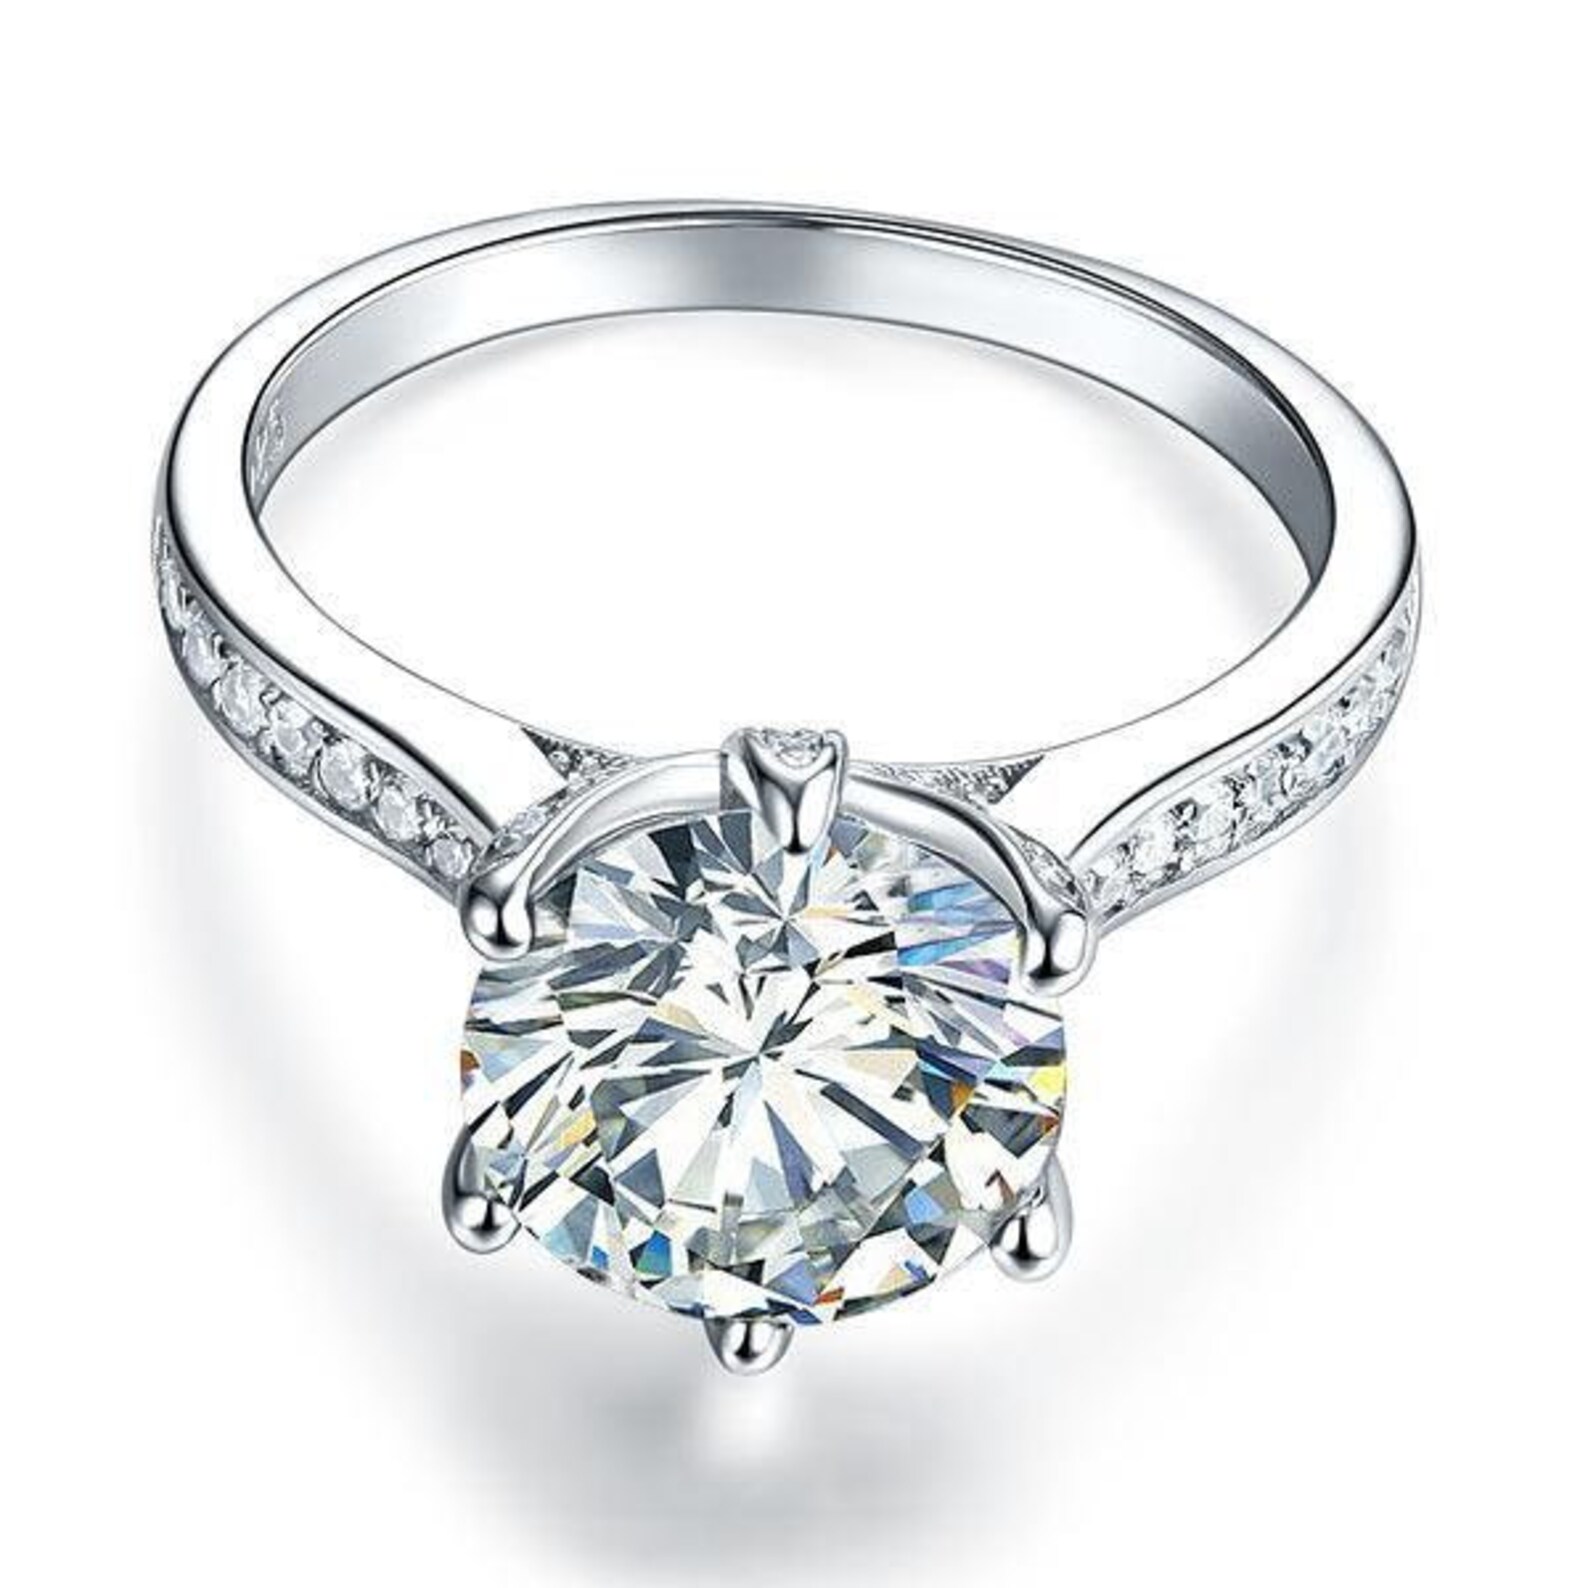 3 Carat Round Cut Lab Created Diamond Ring Engagement